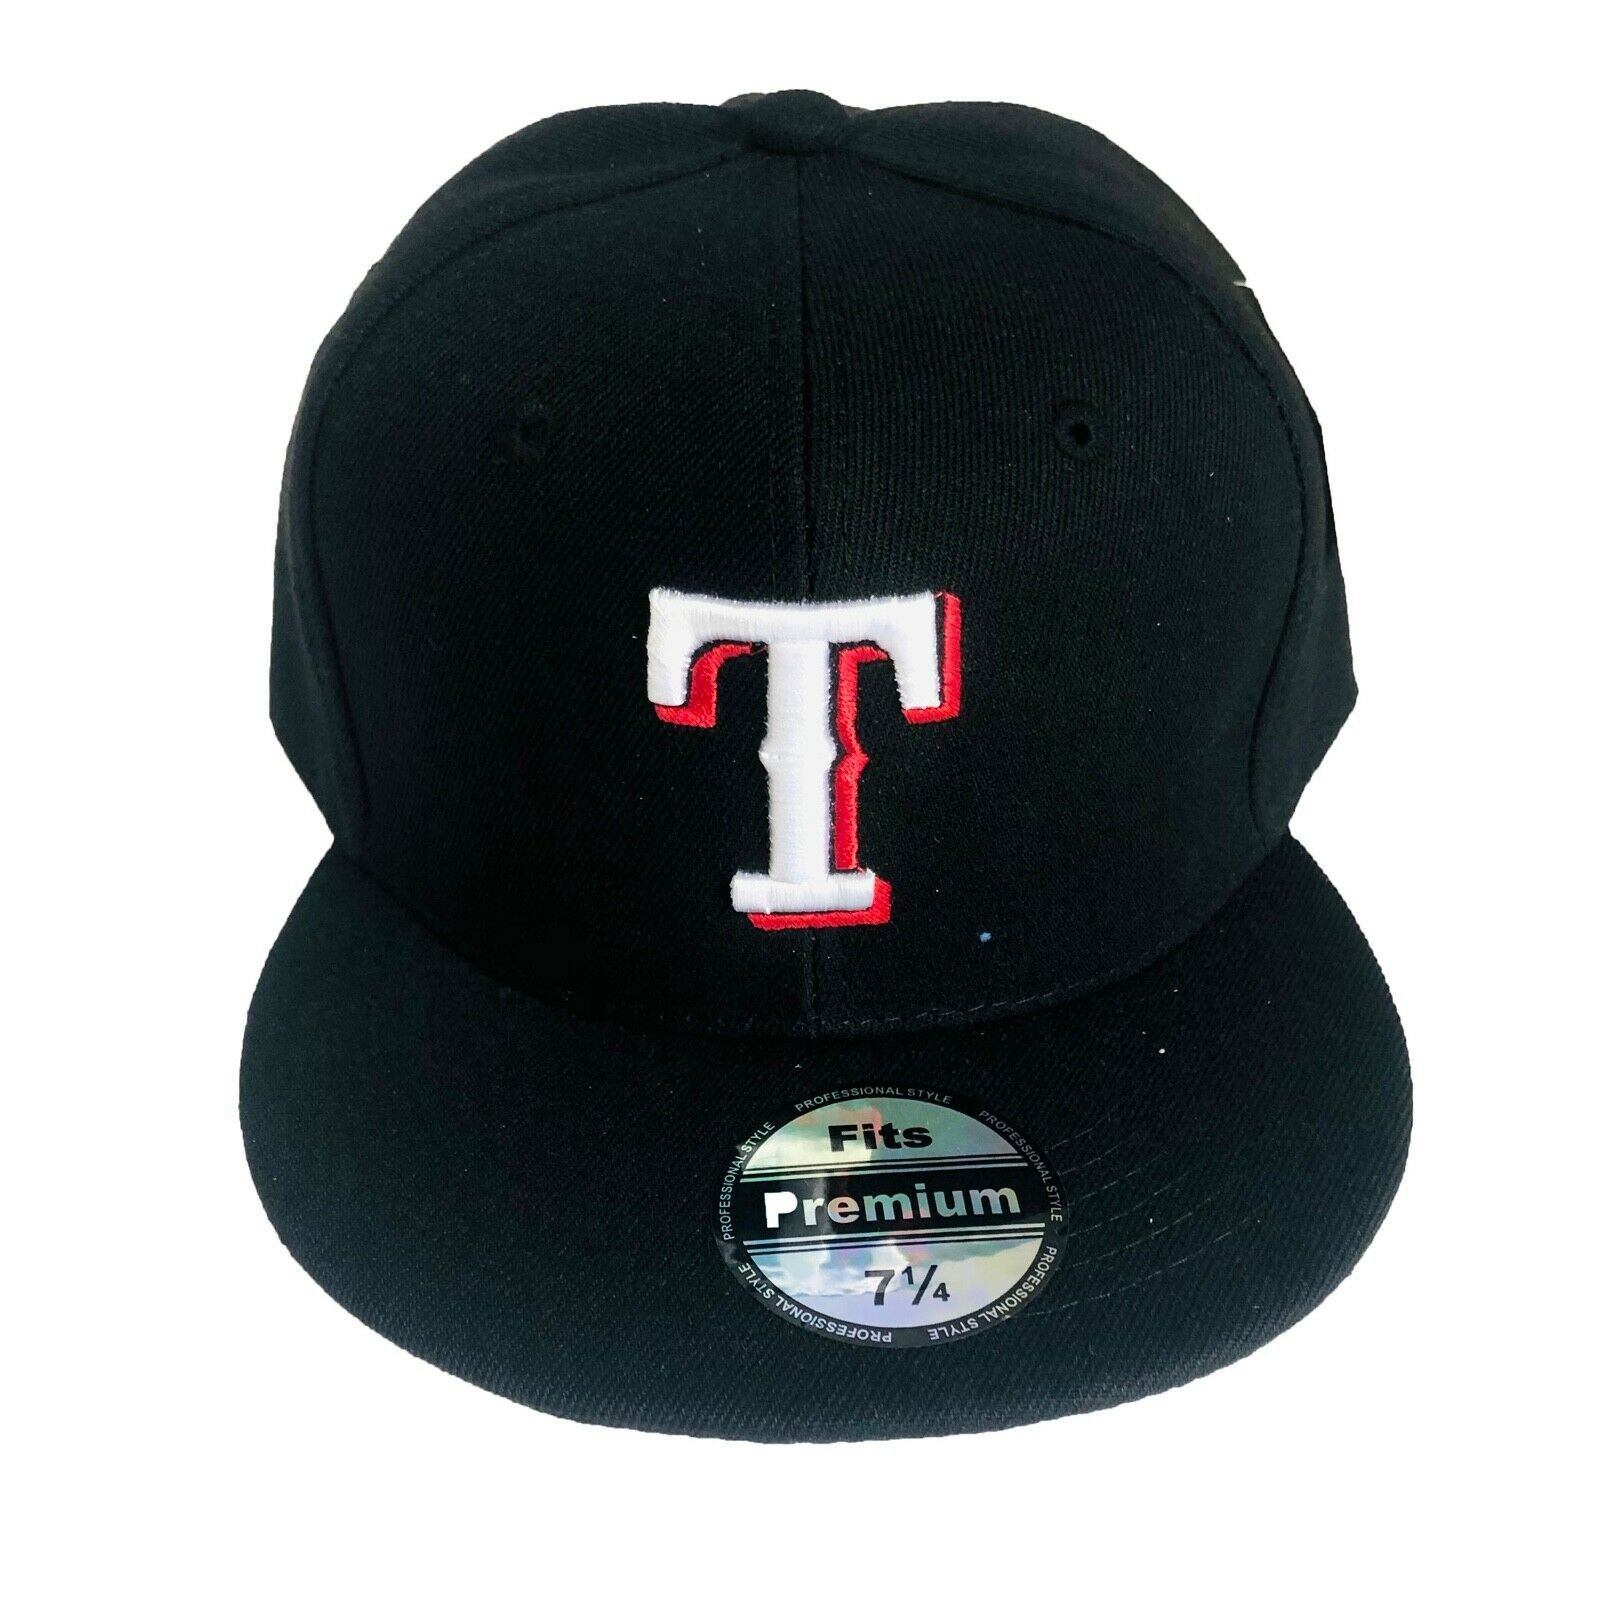 NEW Mens Texas Rangers Baseball Cap Fitted Hat Multi Size Black